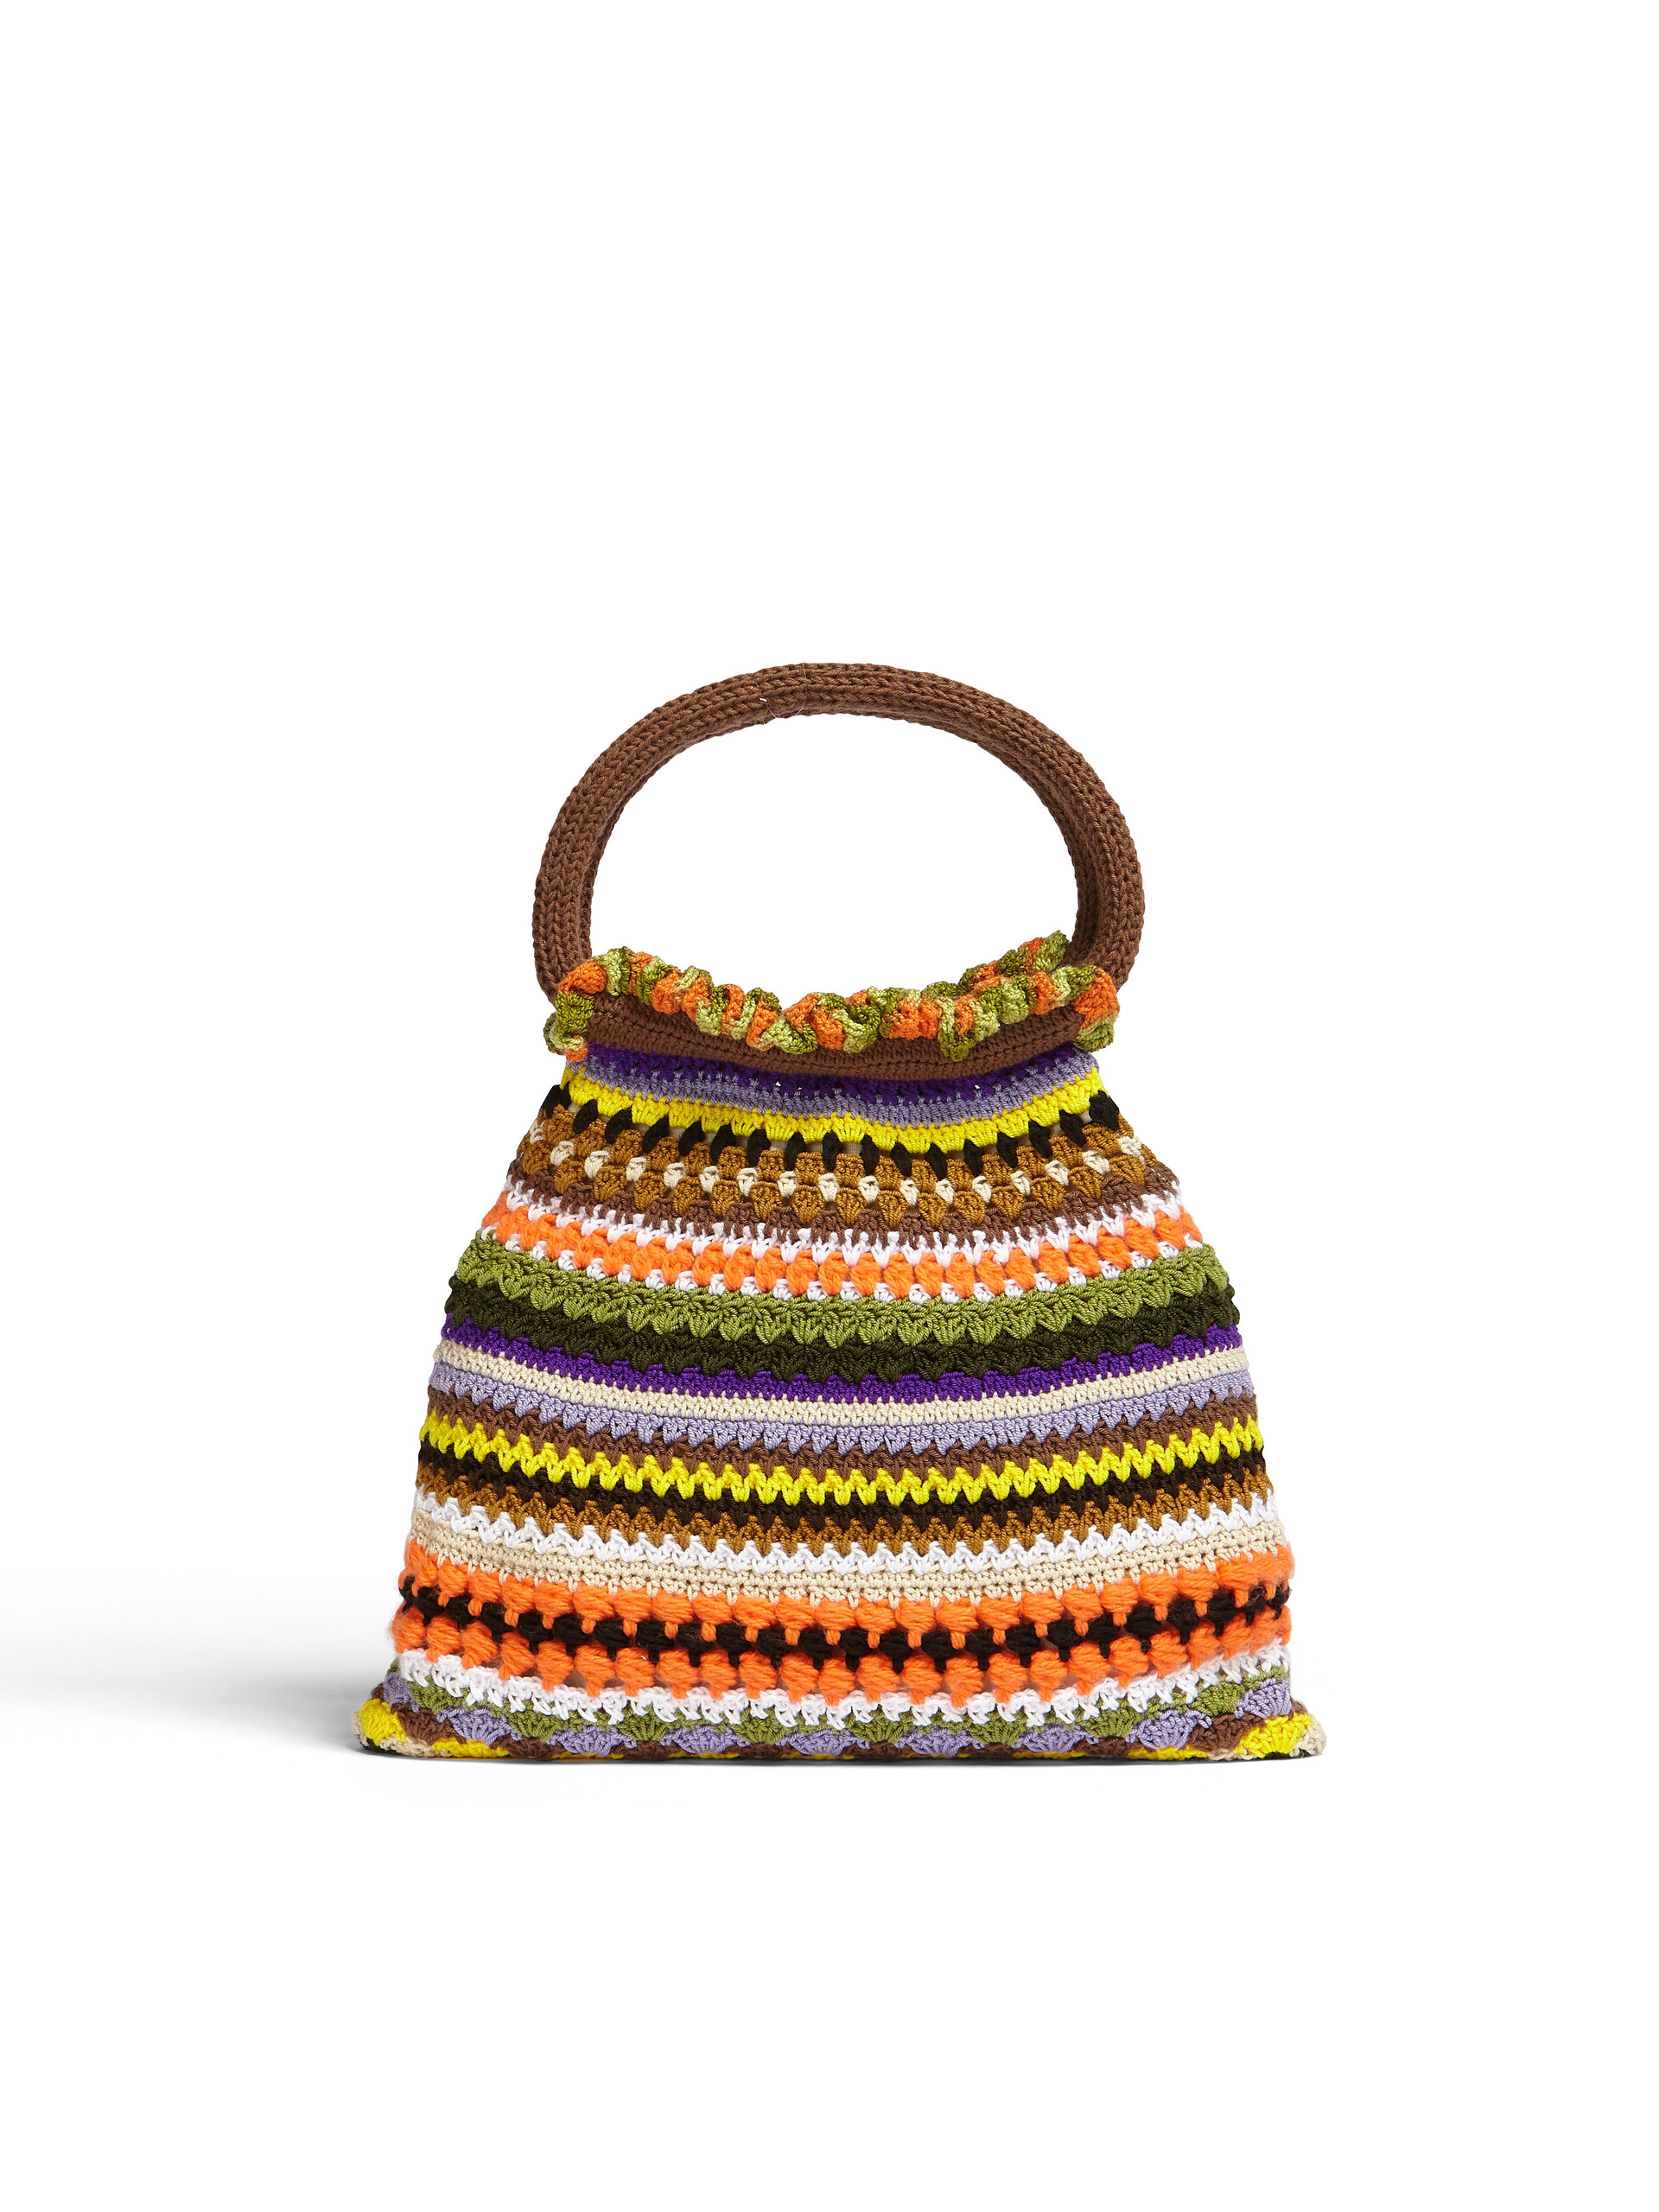 MARNI MARKET bag in brown crochet - Furniture - Image 3